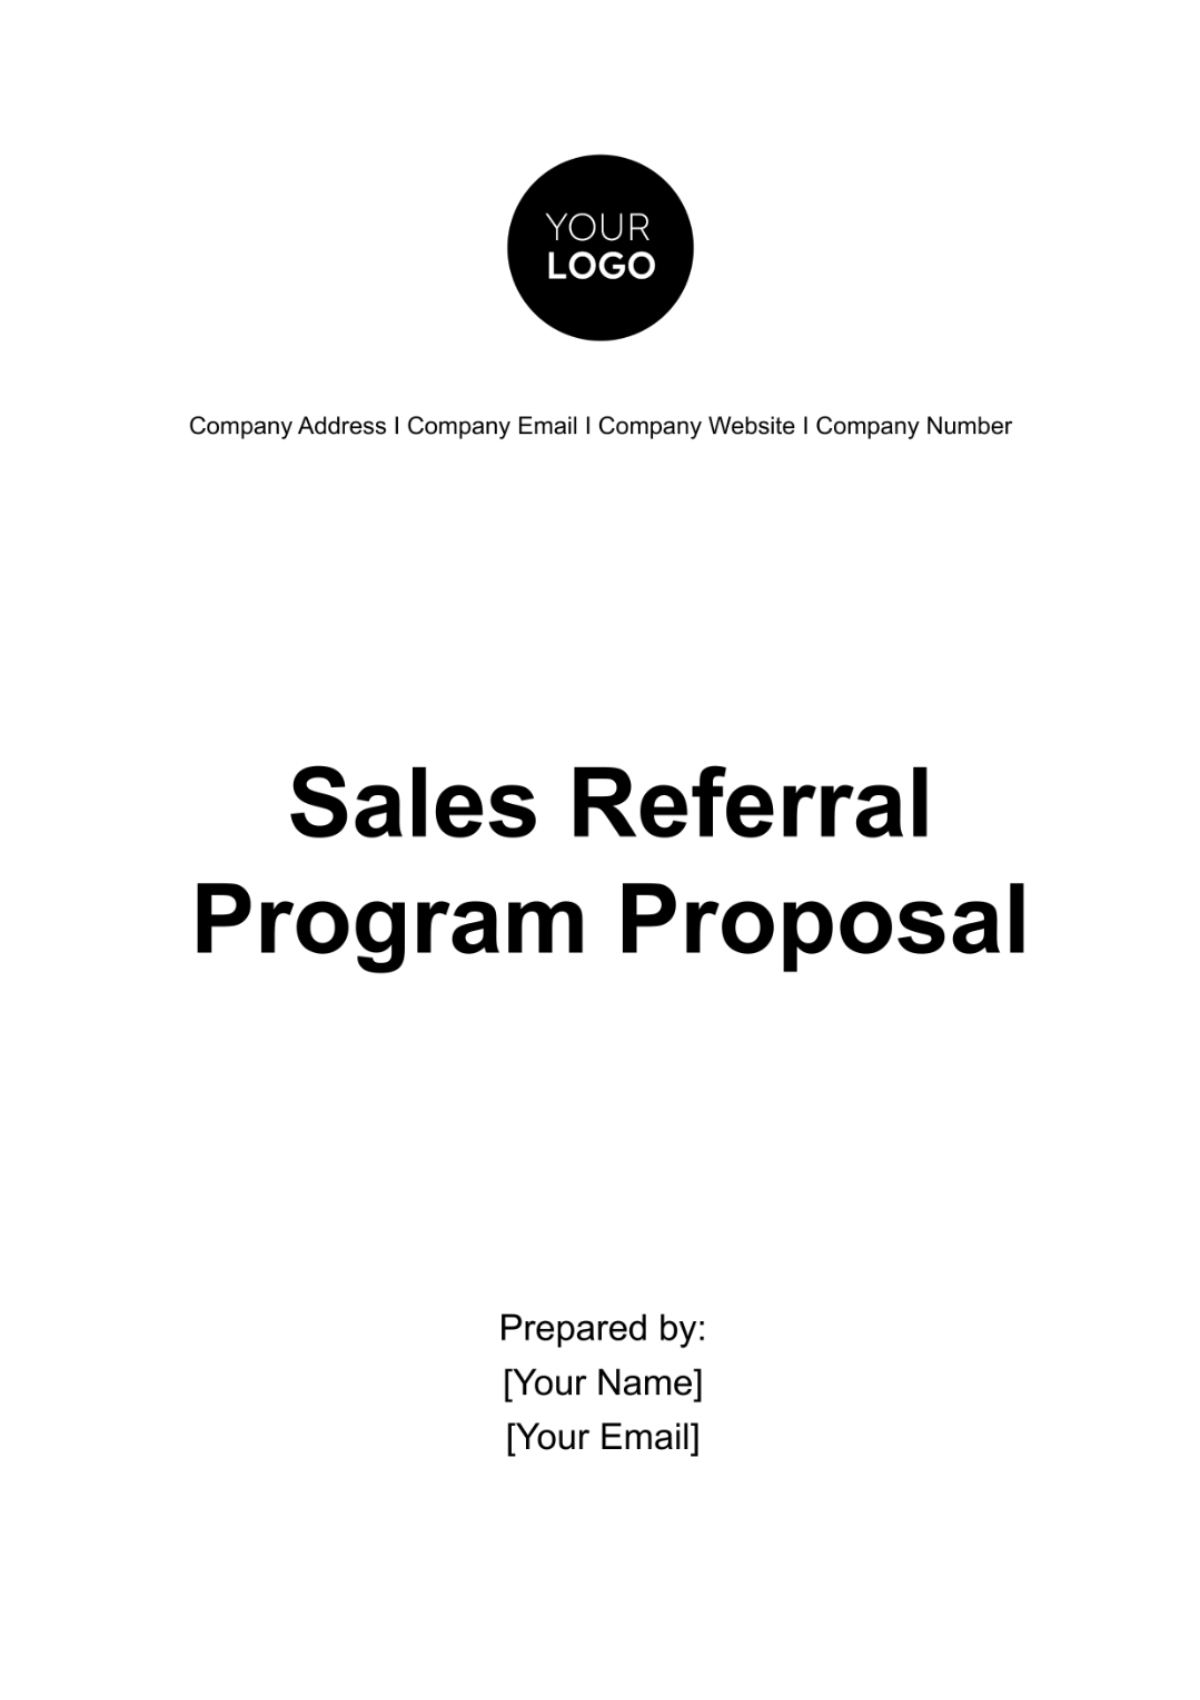 Free Sales Referral Program Proposal Template